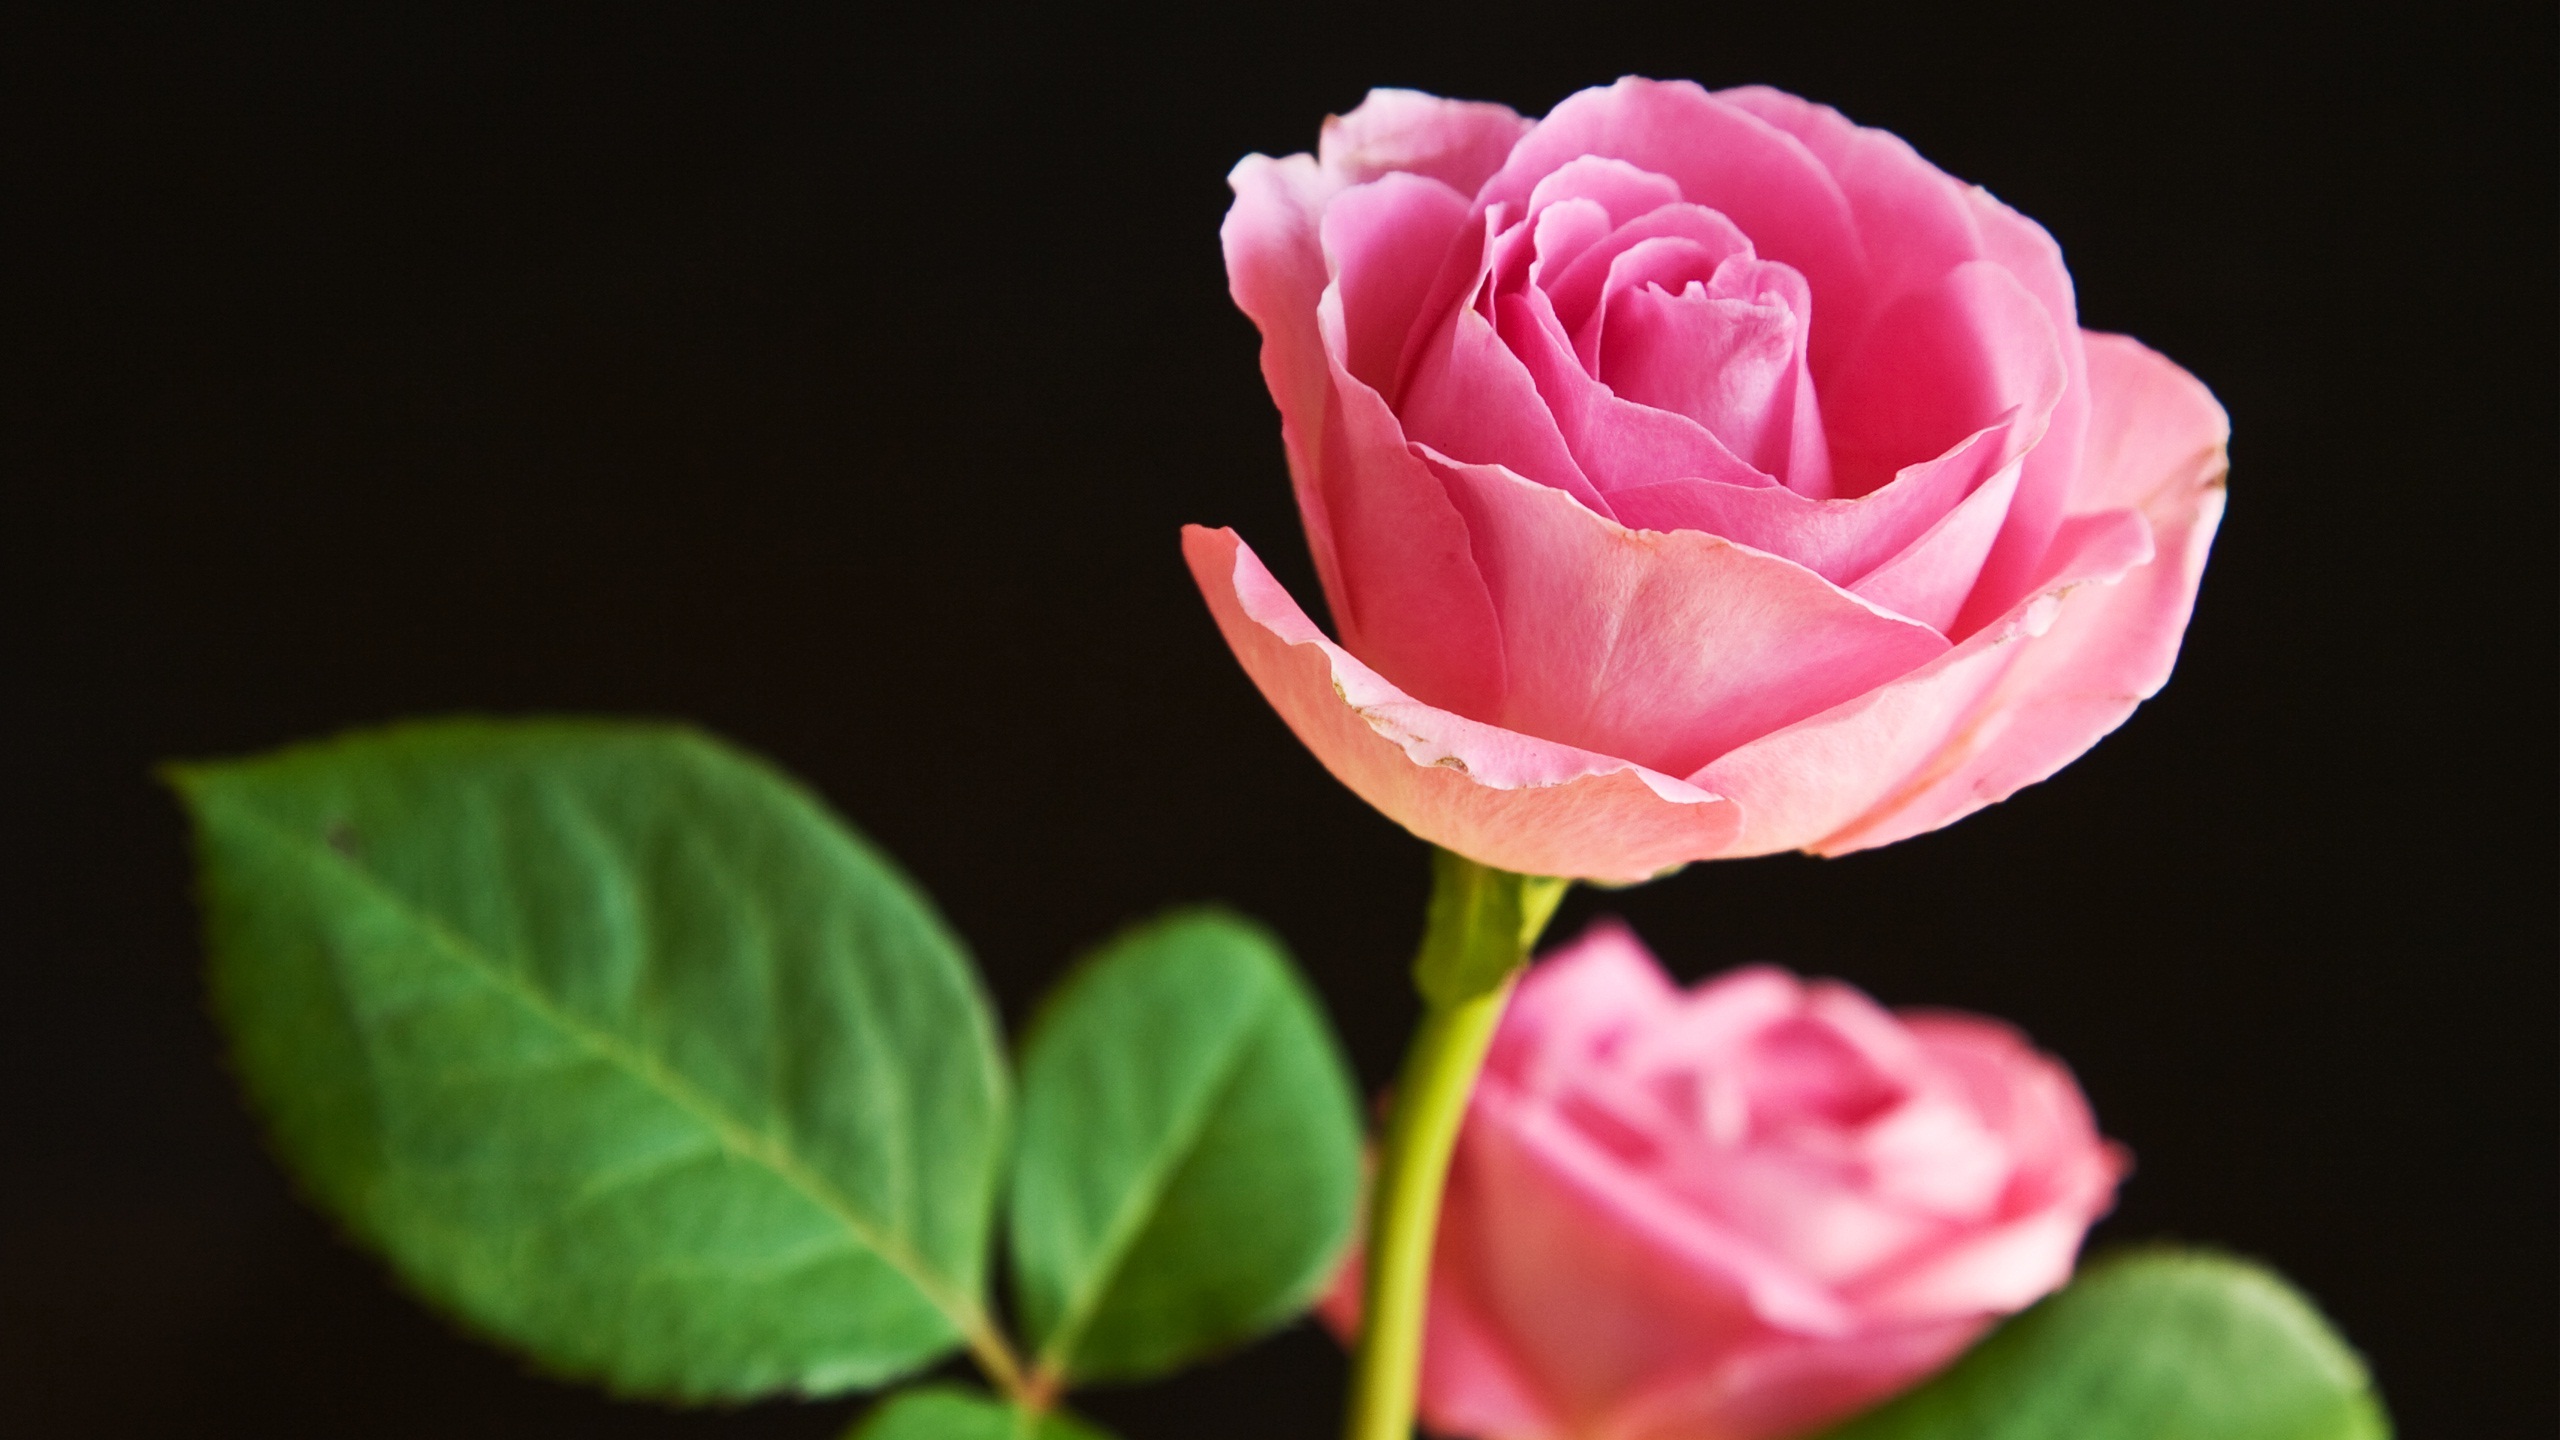 rose flower wallpaper hd free download,flower,flowering plant,garden roses,petal,pink